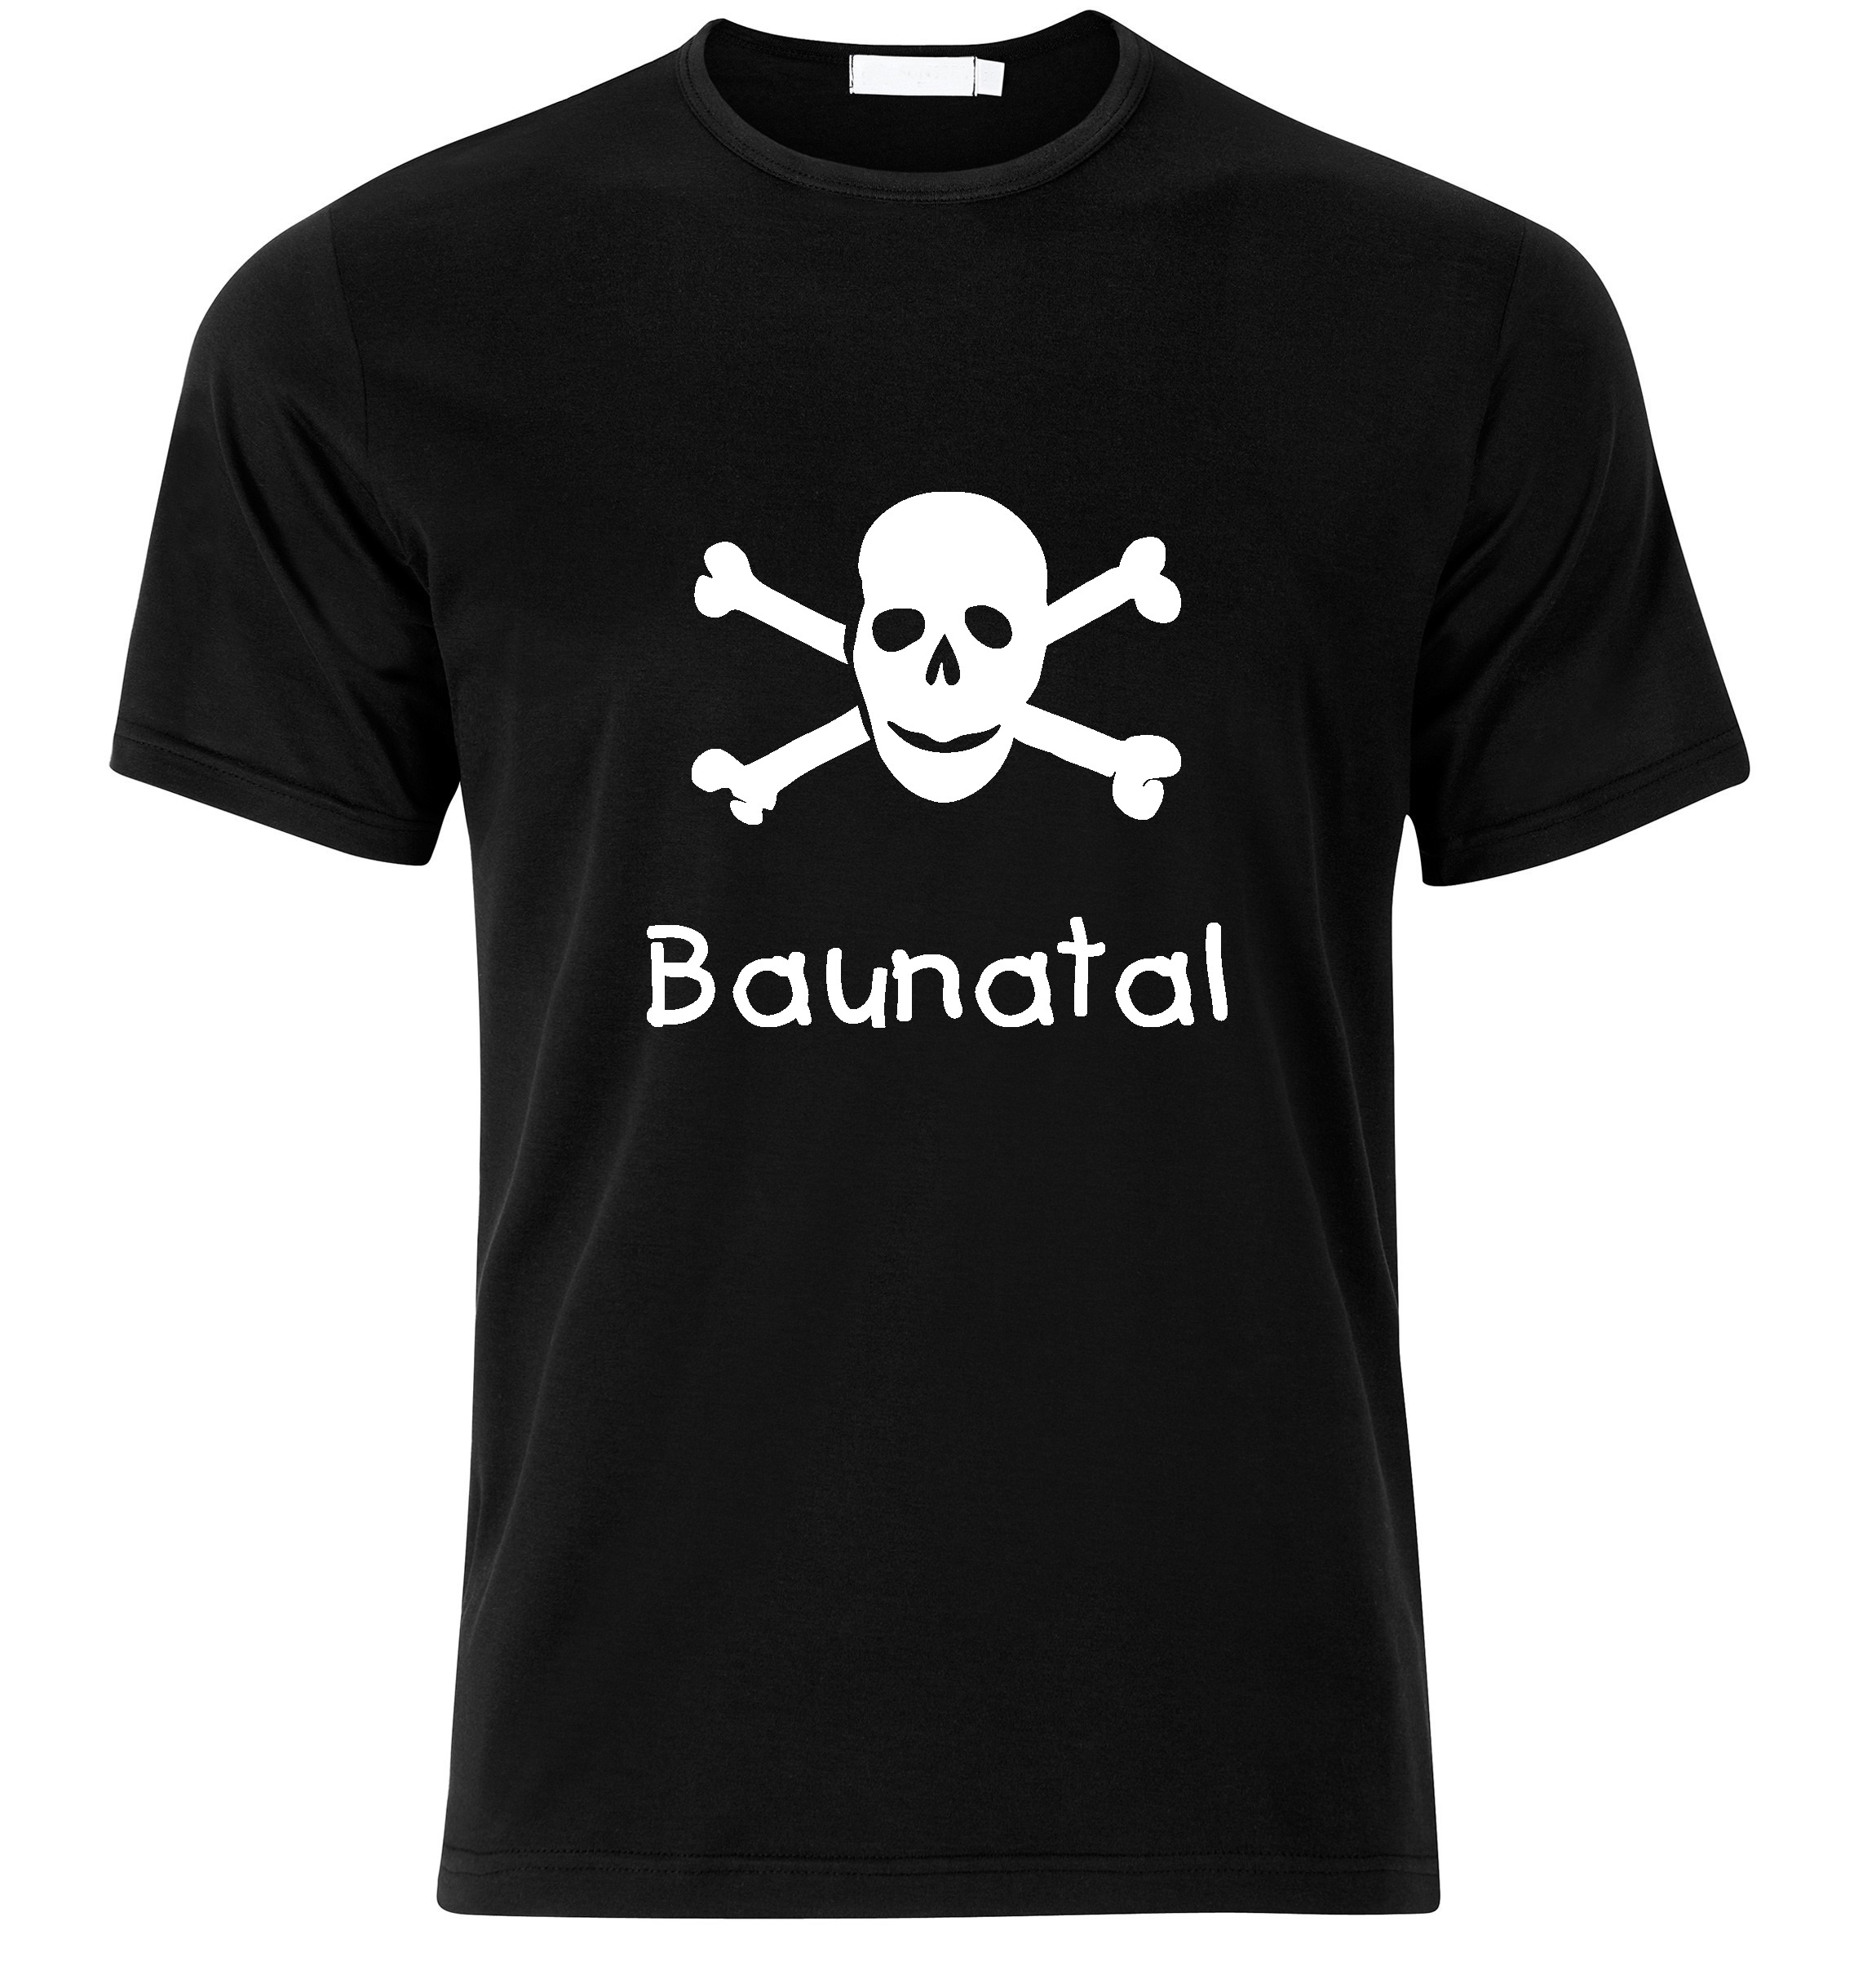 T-Shirt Baunatal Jolly Roger, Totenkopf